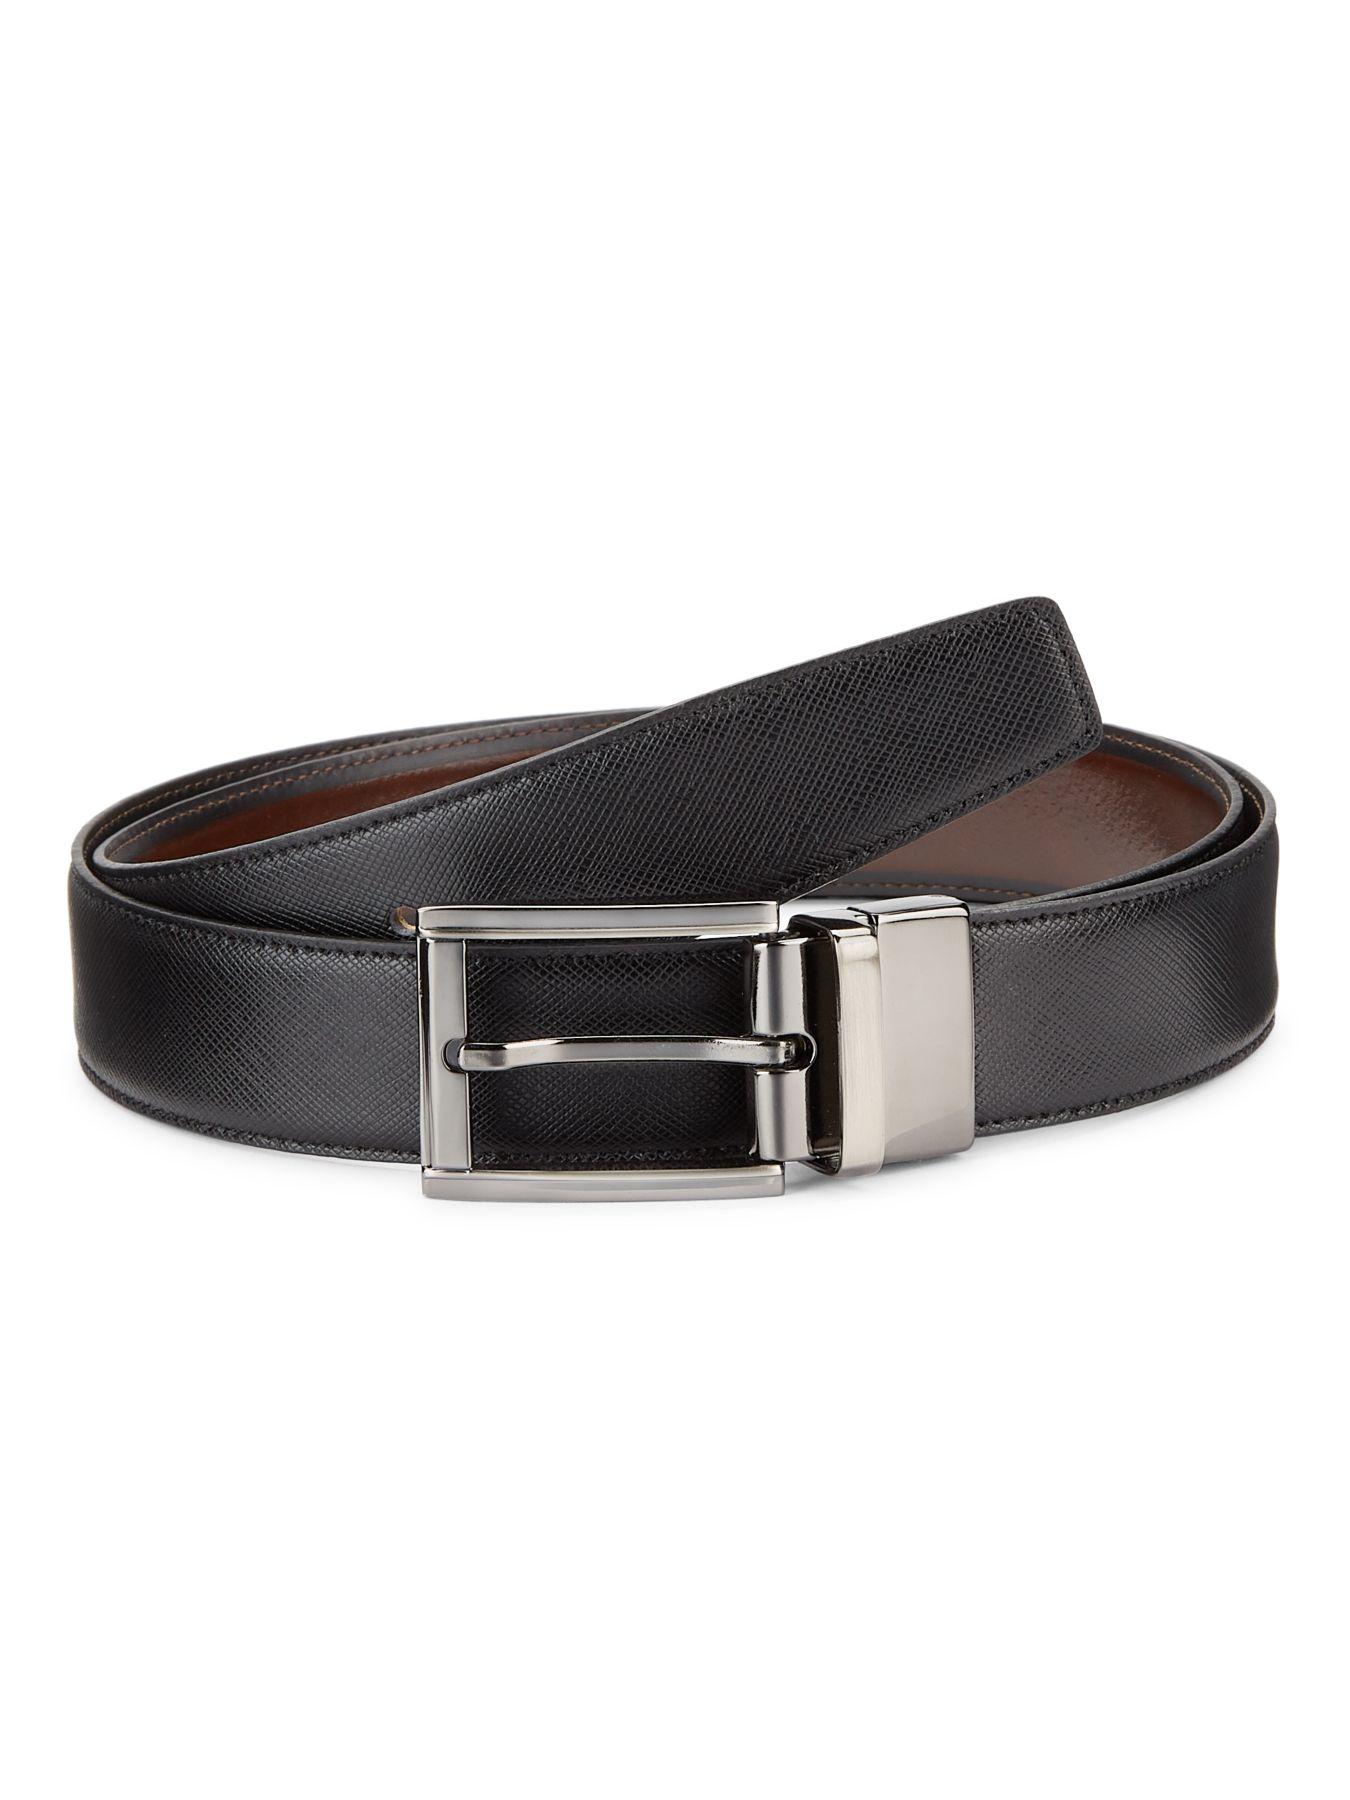 Saks Fifth Avenue Collection Reversible Leather Belt in Black Brown (Black) for Men - Lyst